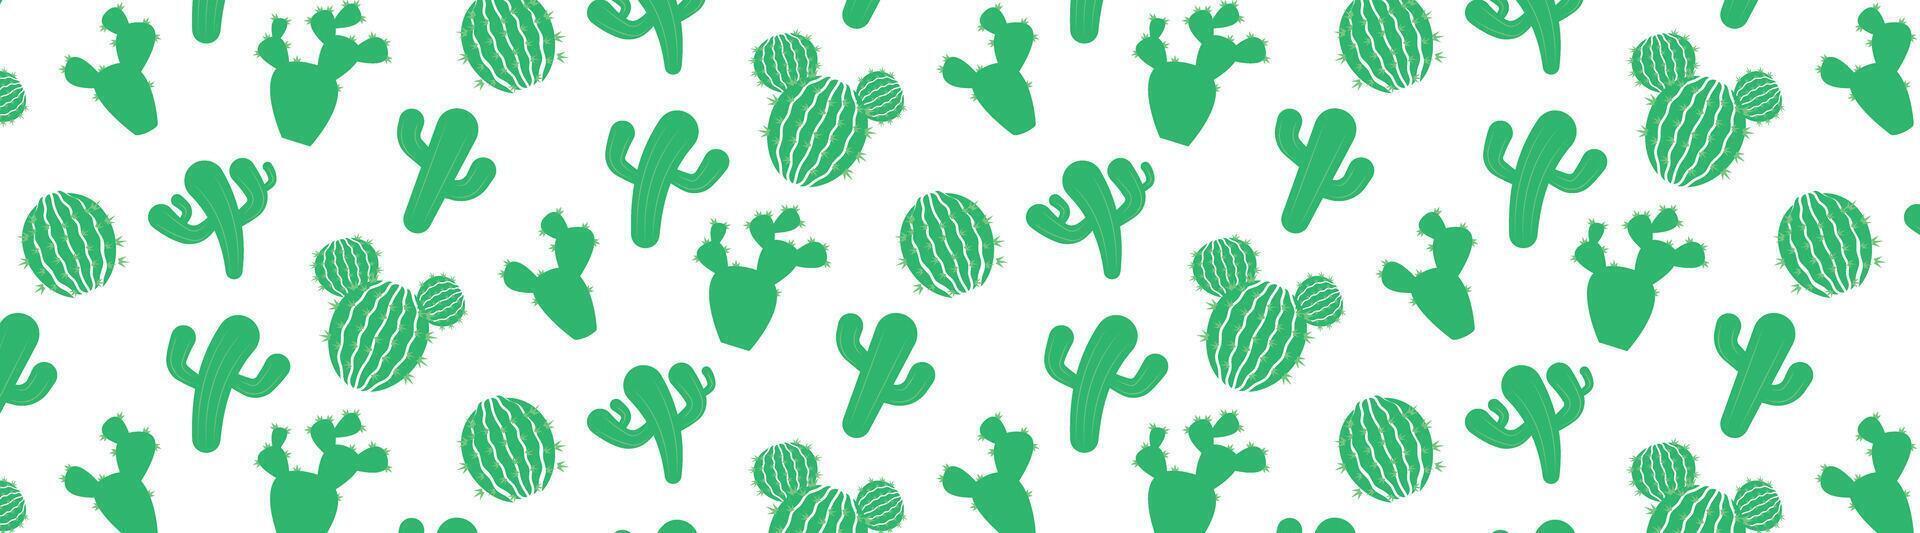 süß Grün Kaktus Pflanze nahtlos Muster Hintergrund vektor